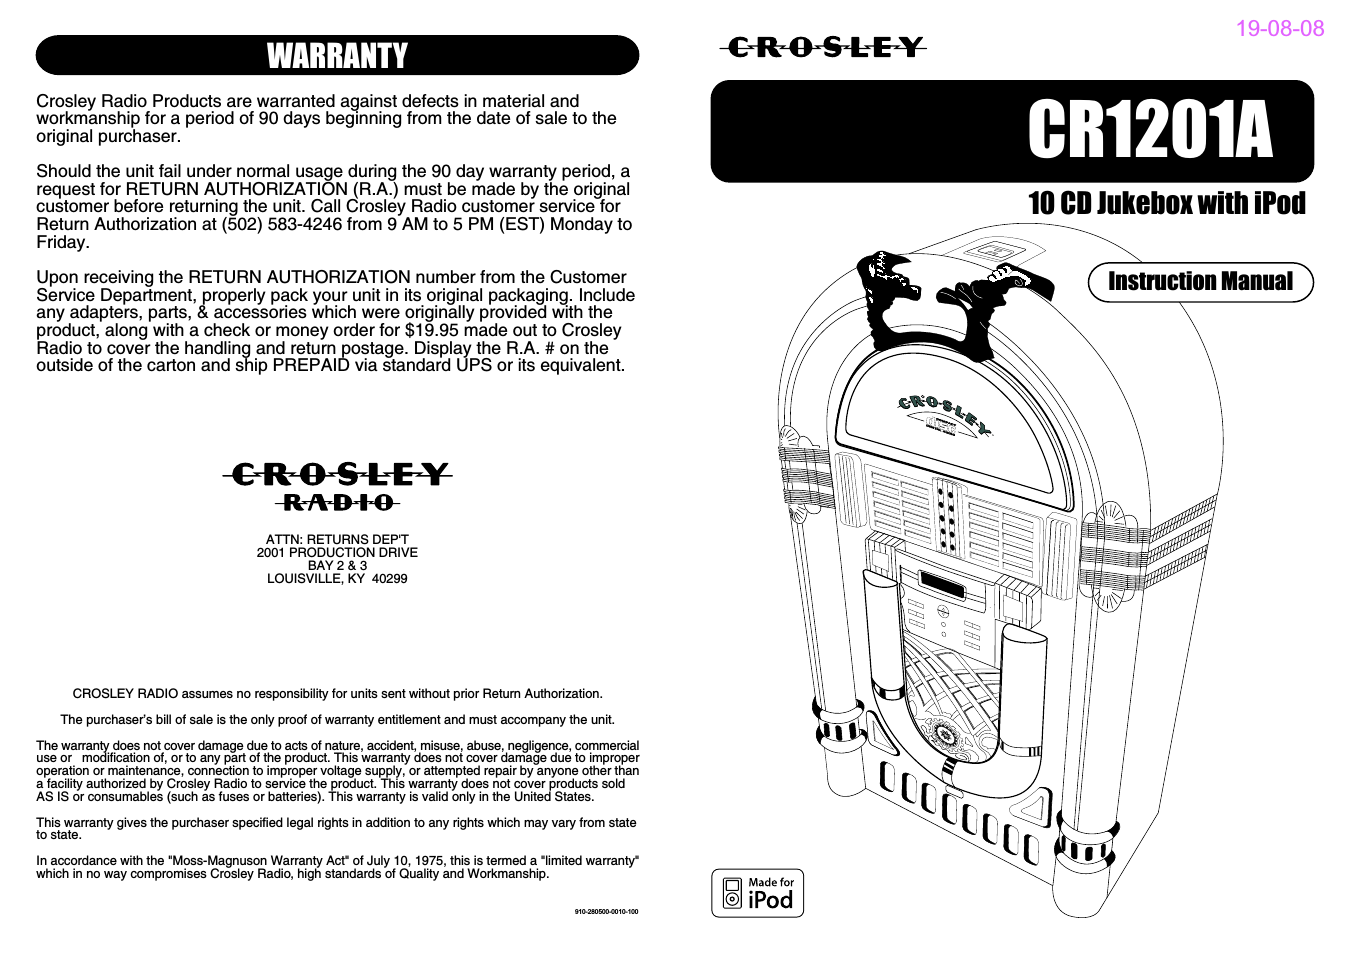 Crosley Full Size Jukebox CR12-10